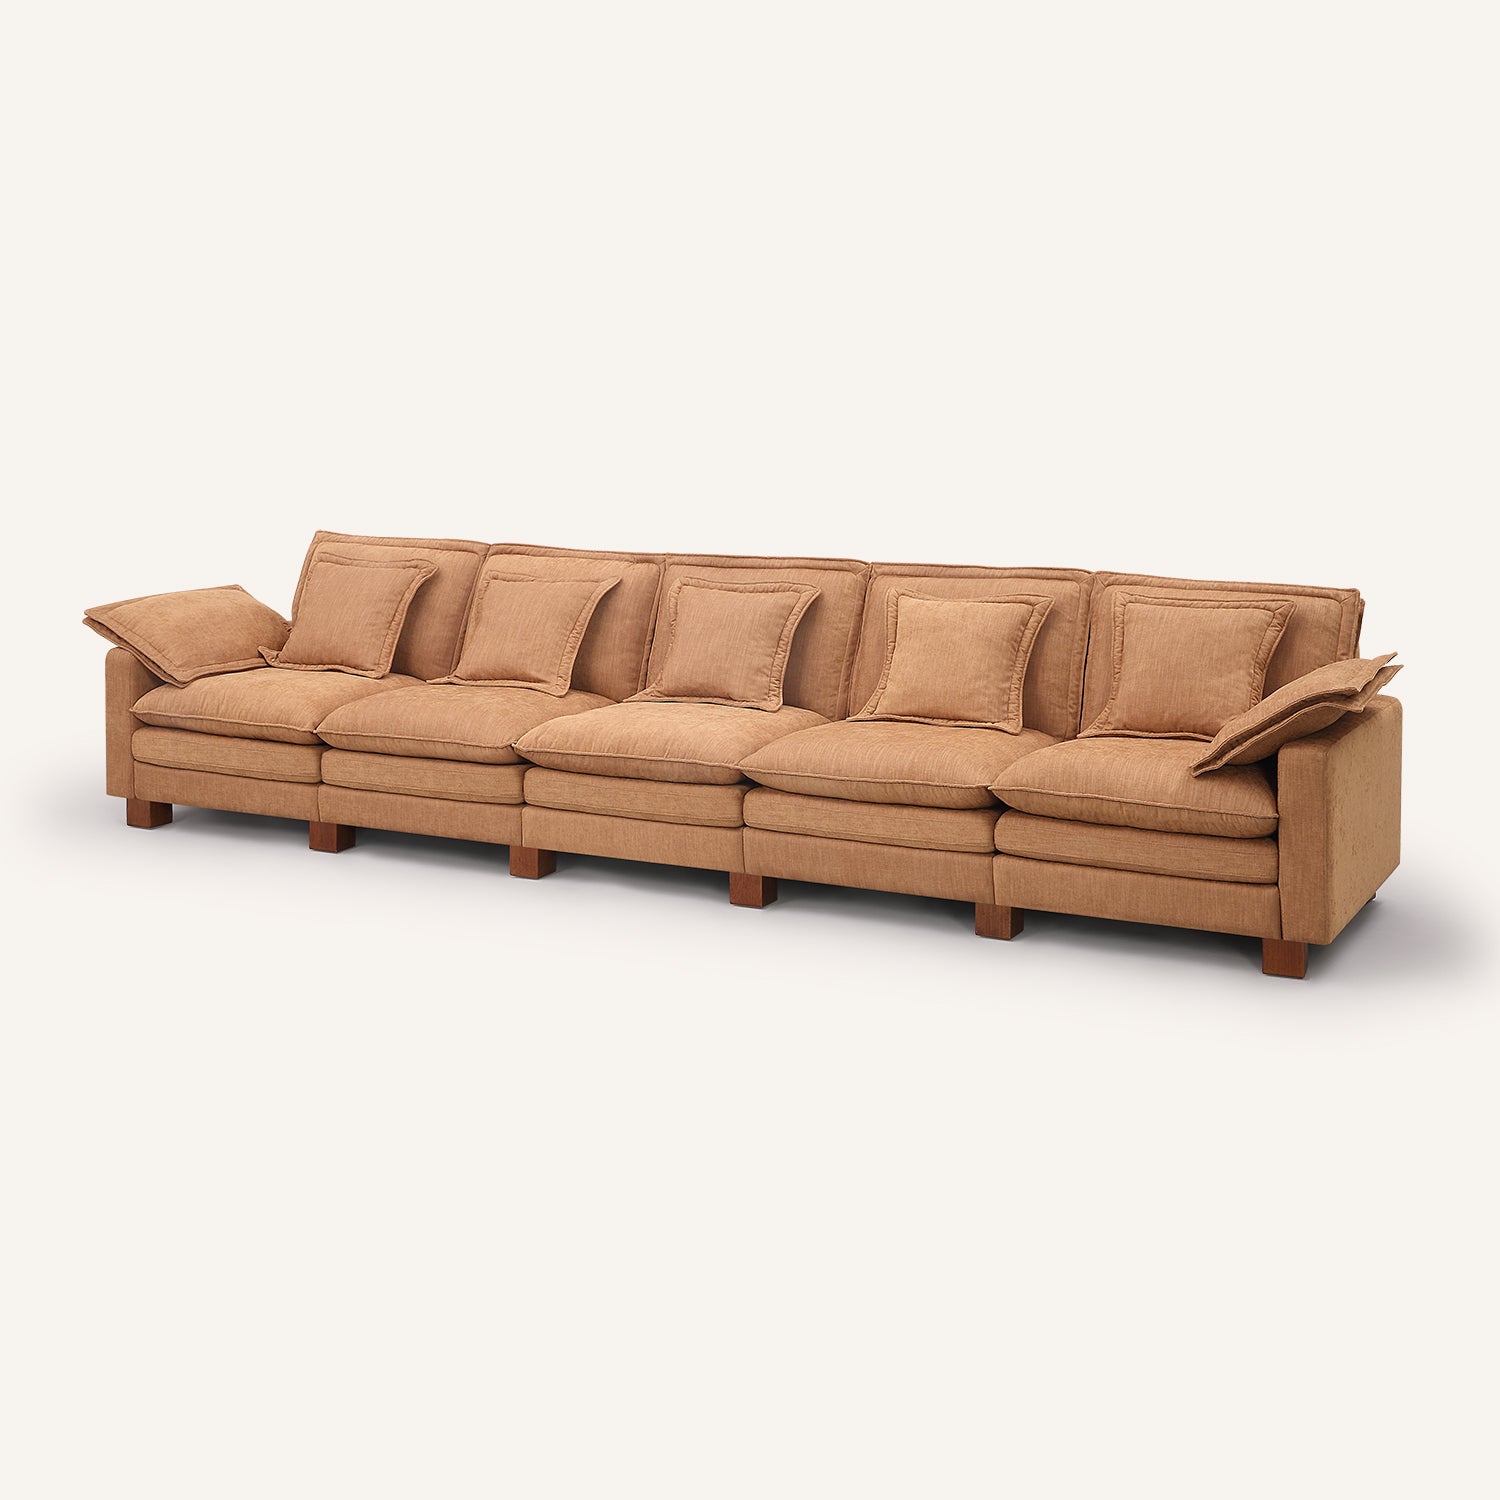 Stacked Tan Linen 5-Seat Sofa